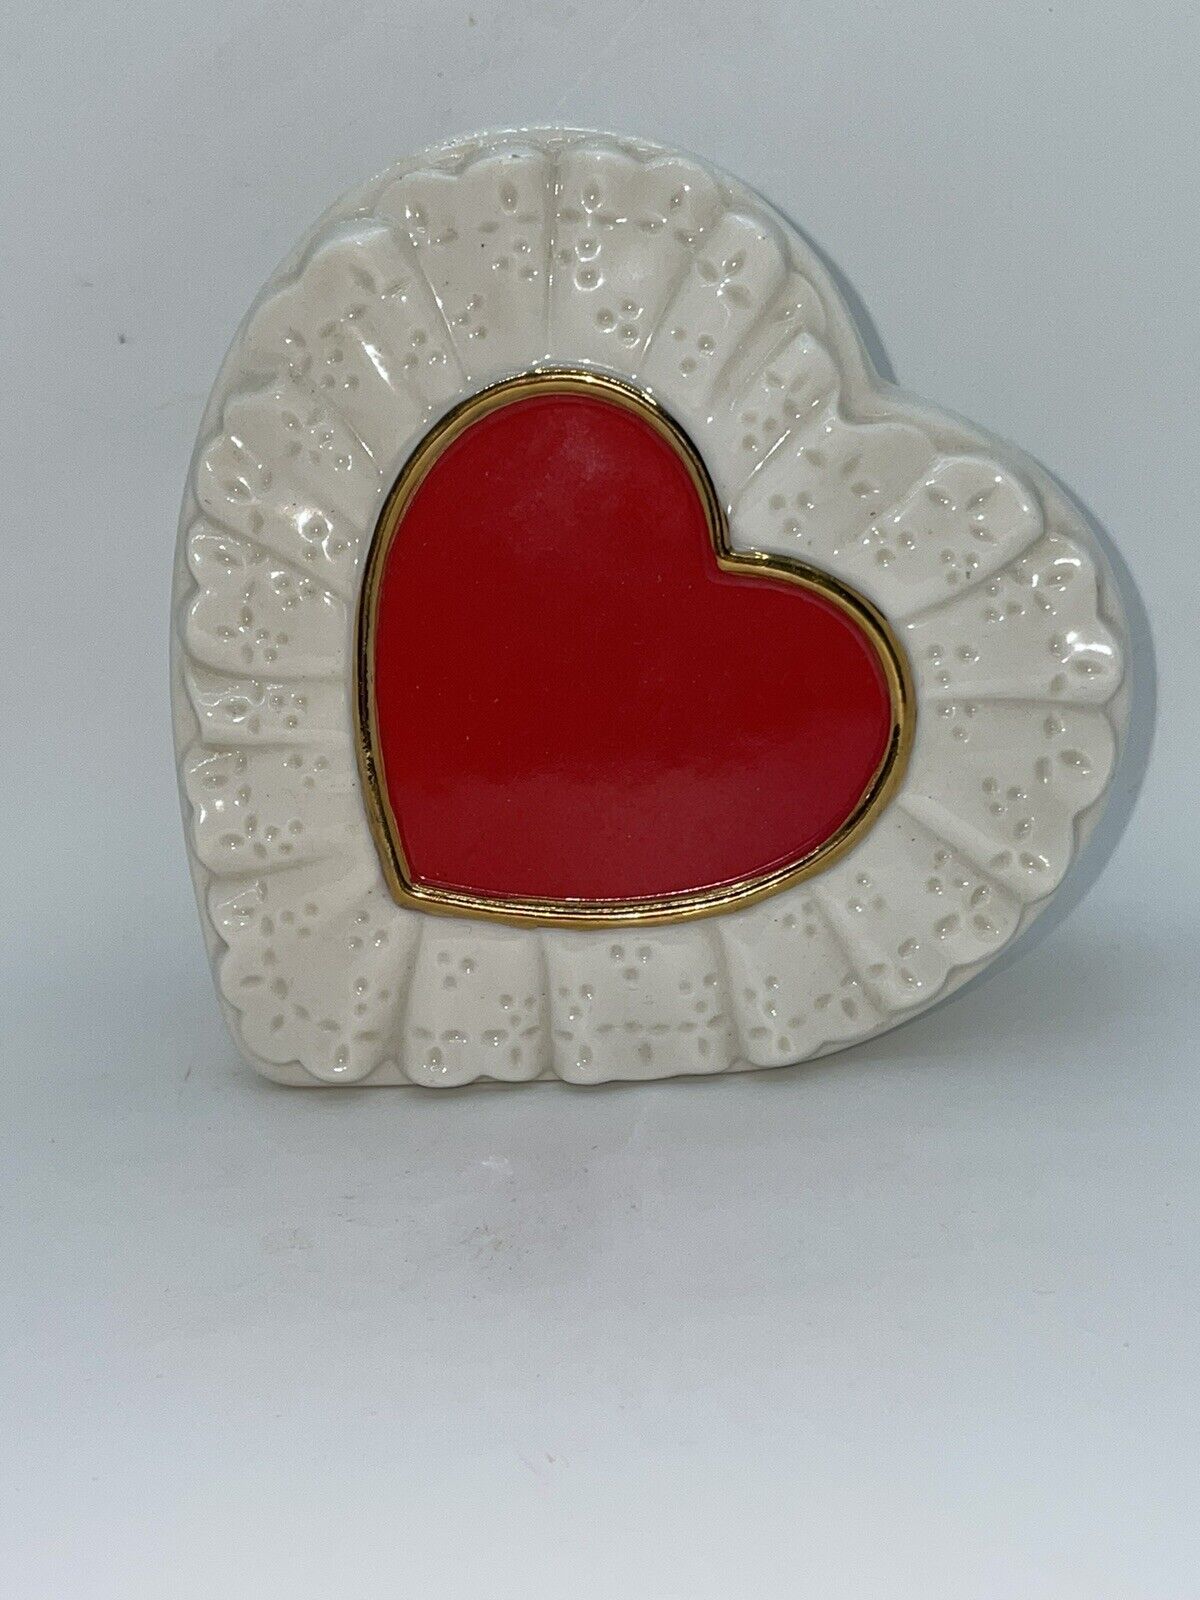 Vintage Teleflora Gift Ceramic Heart Planter Vase Valentine's Day Red Love